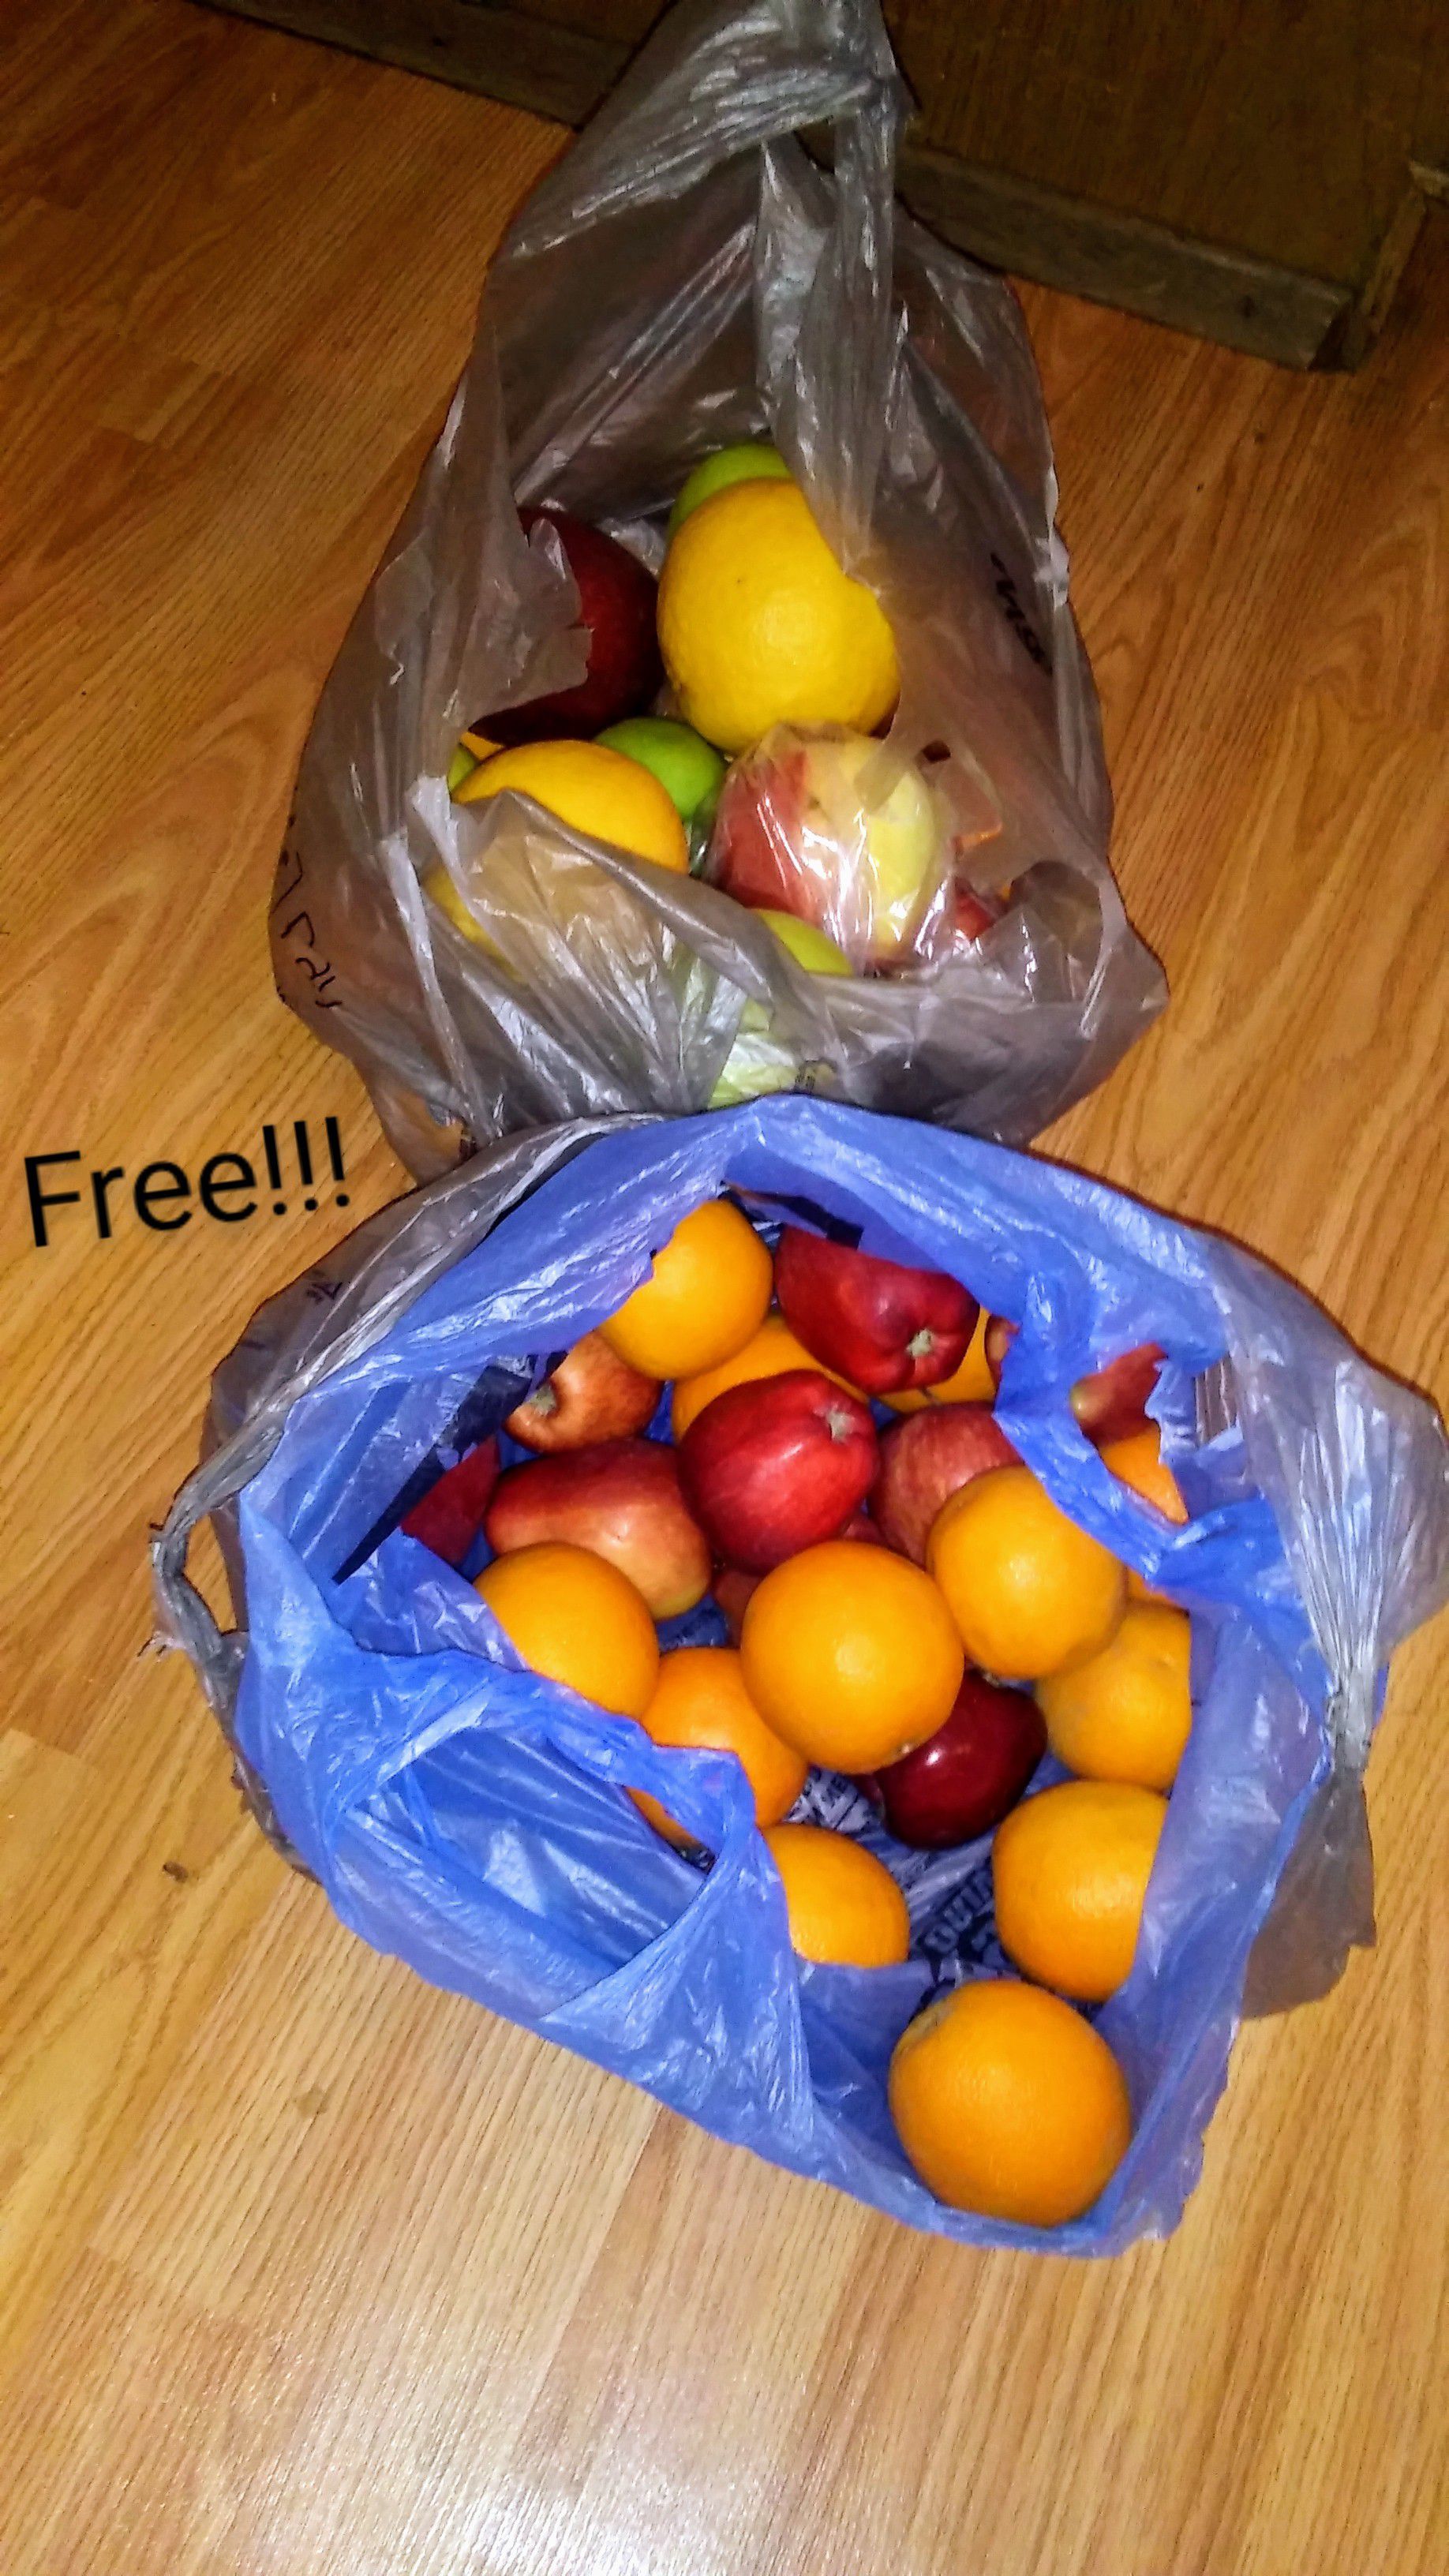 Free fresh fruit